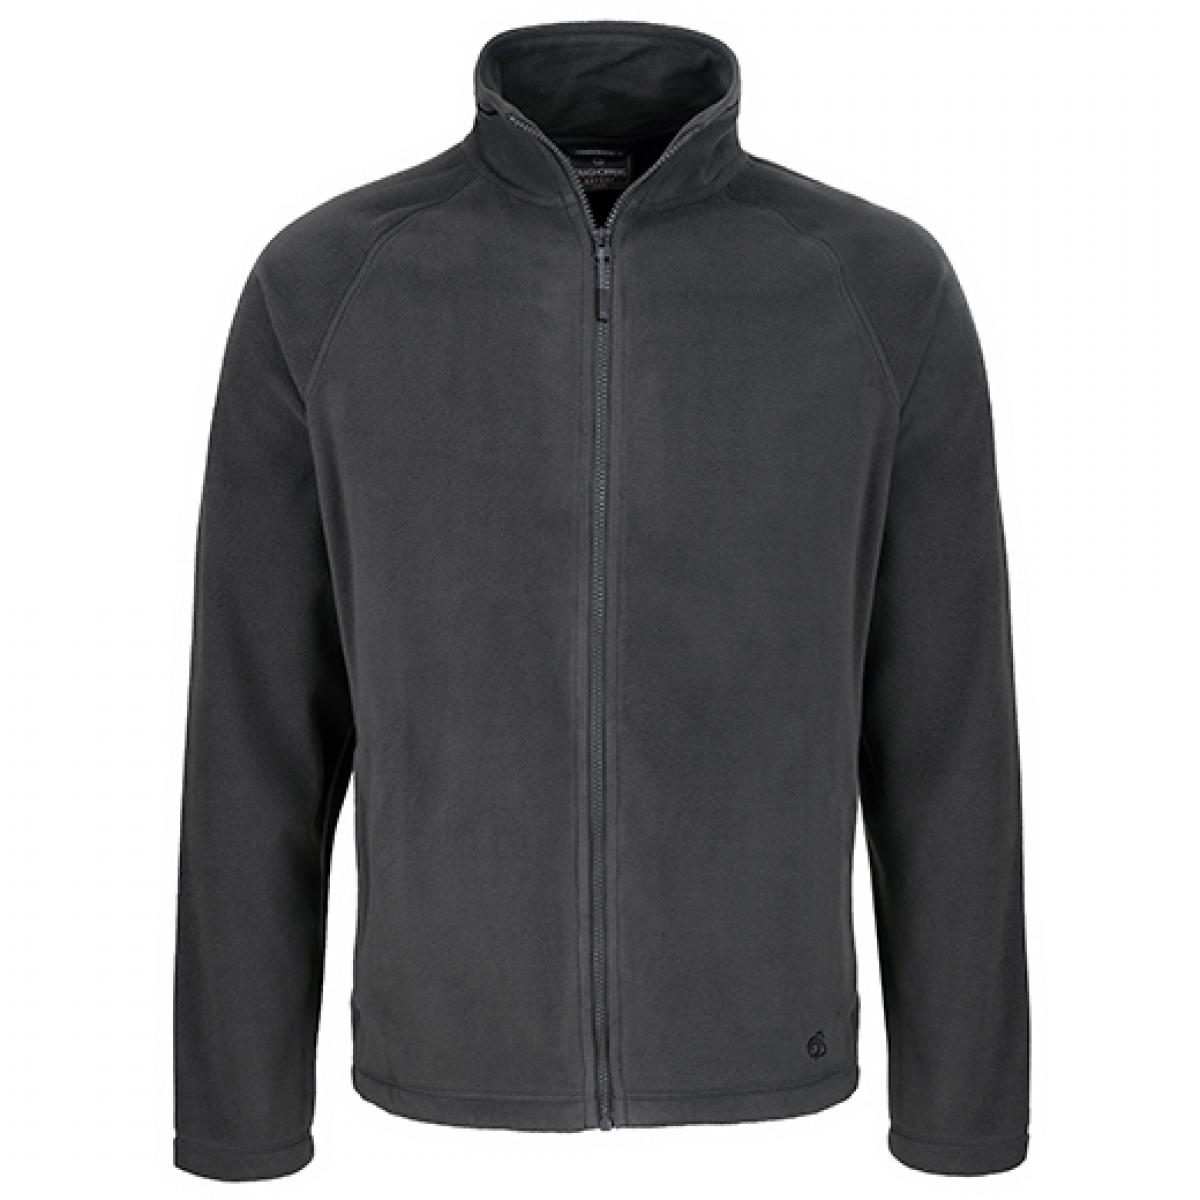 Hersteller: Craghoppers Expert Herstellernummer: CEA001 Artikelbezeichnung: Expert Corey 200 Fleece Jacket Farbe: Carbon Grey